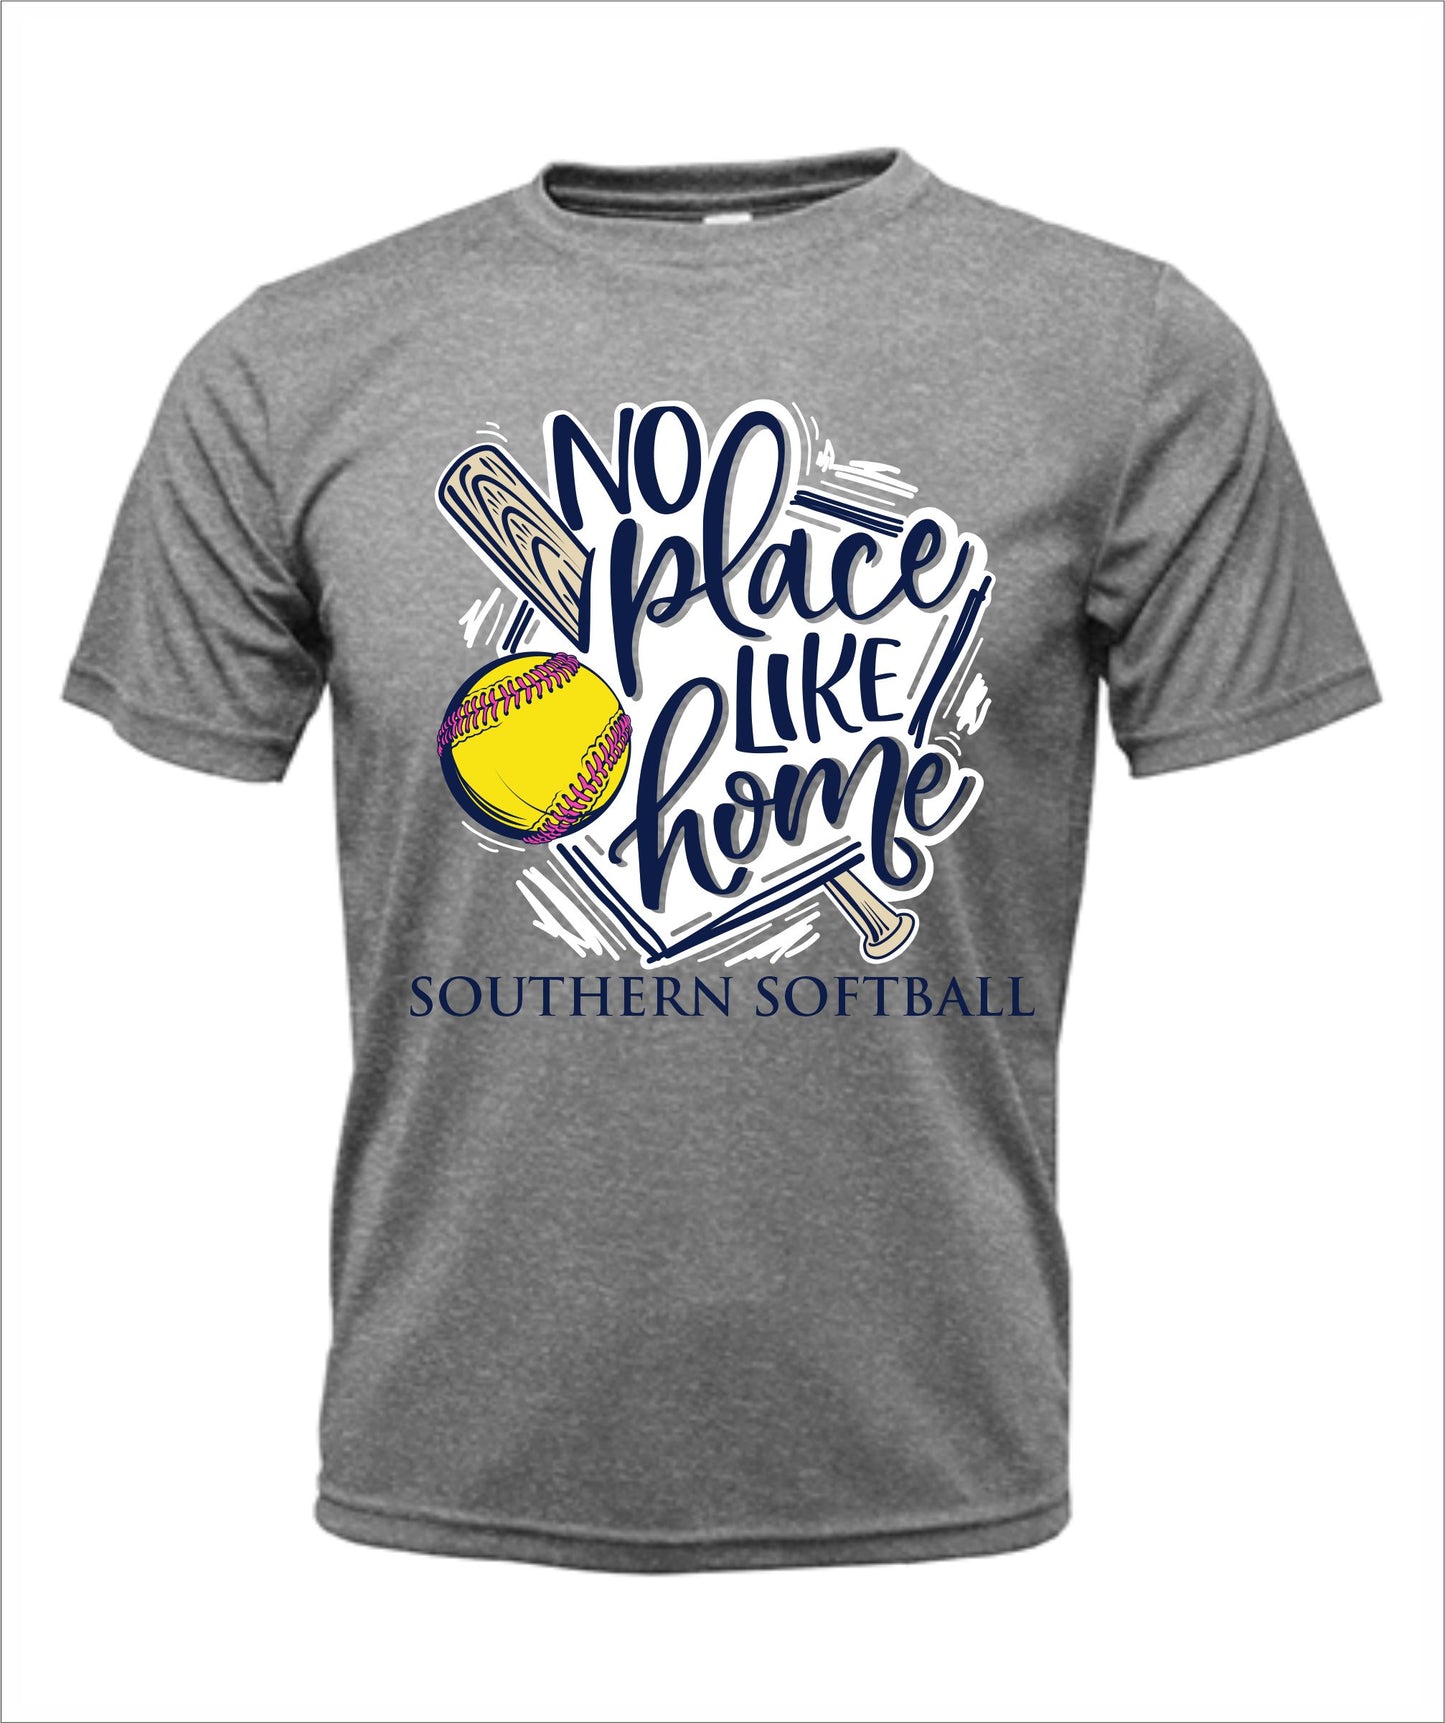 Softball "No Place Like Home" Cotton T-Shirt